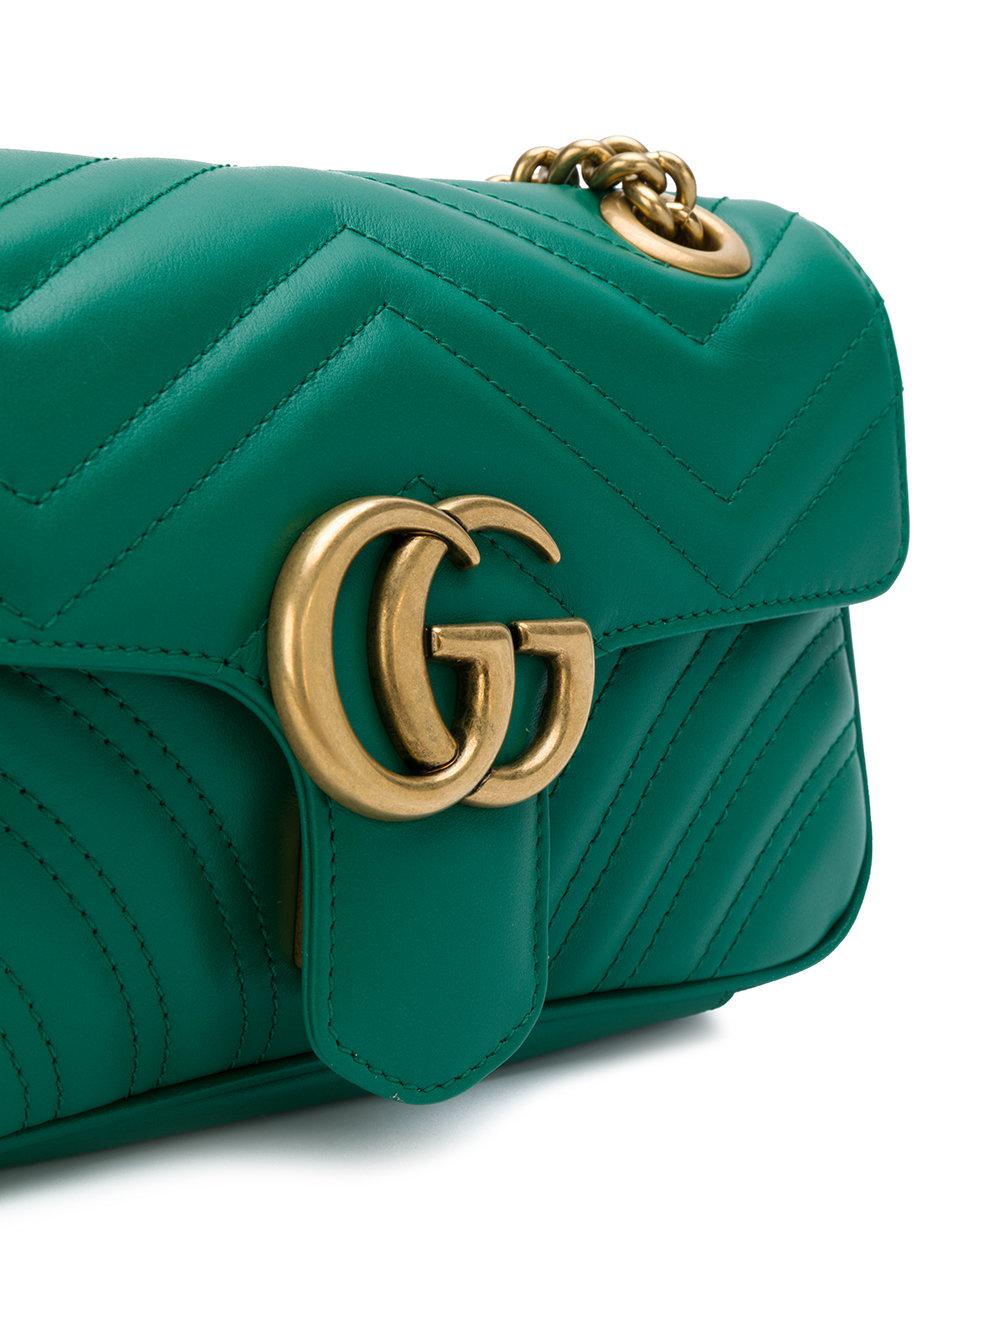 GG Marmont matelassé mini bag, Gucci